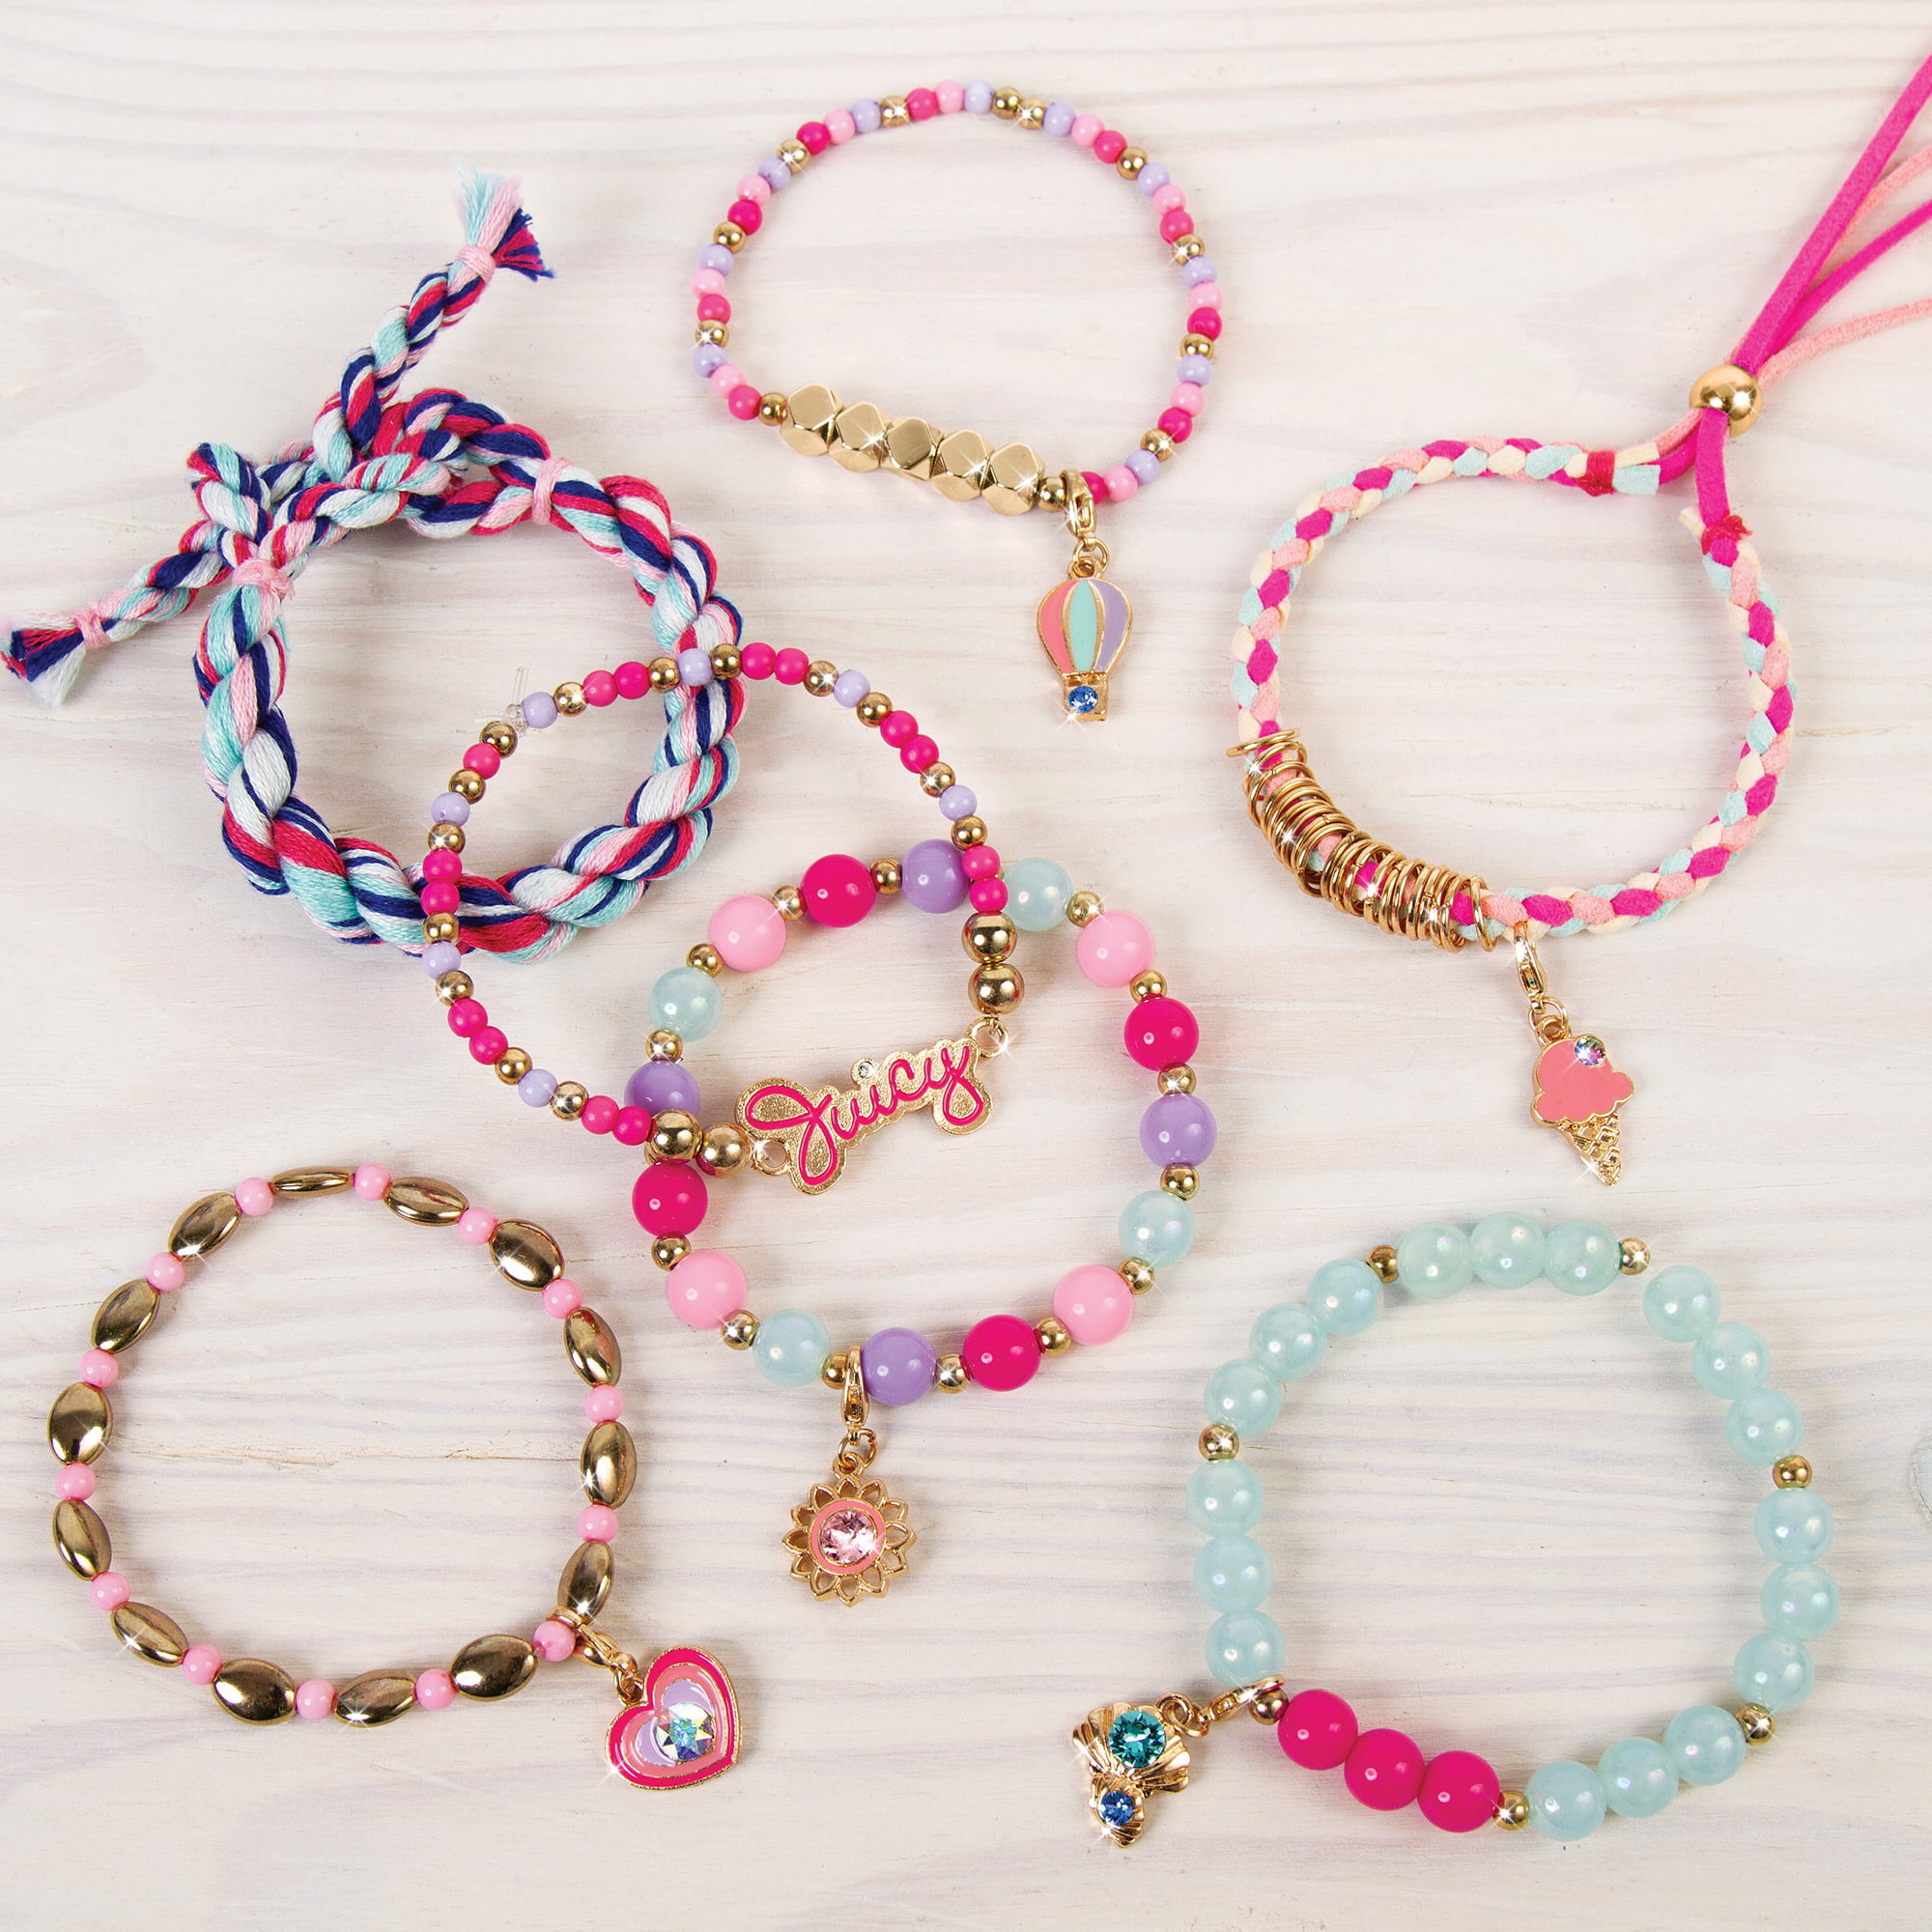 Juicy Couture Mini Crystal Sunshine Bracelets DIY Kit- Create 5 Unique  Charm Bracelets, 190 Pieces, 5 Charms W/ Real Crystals, Ages 8+